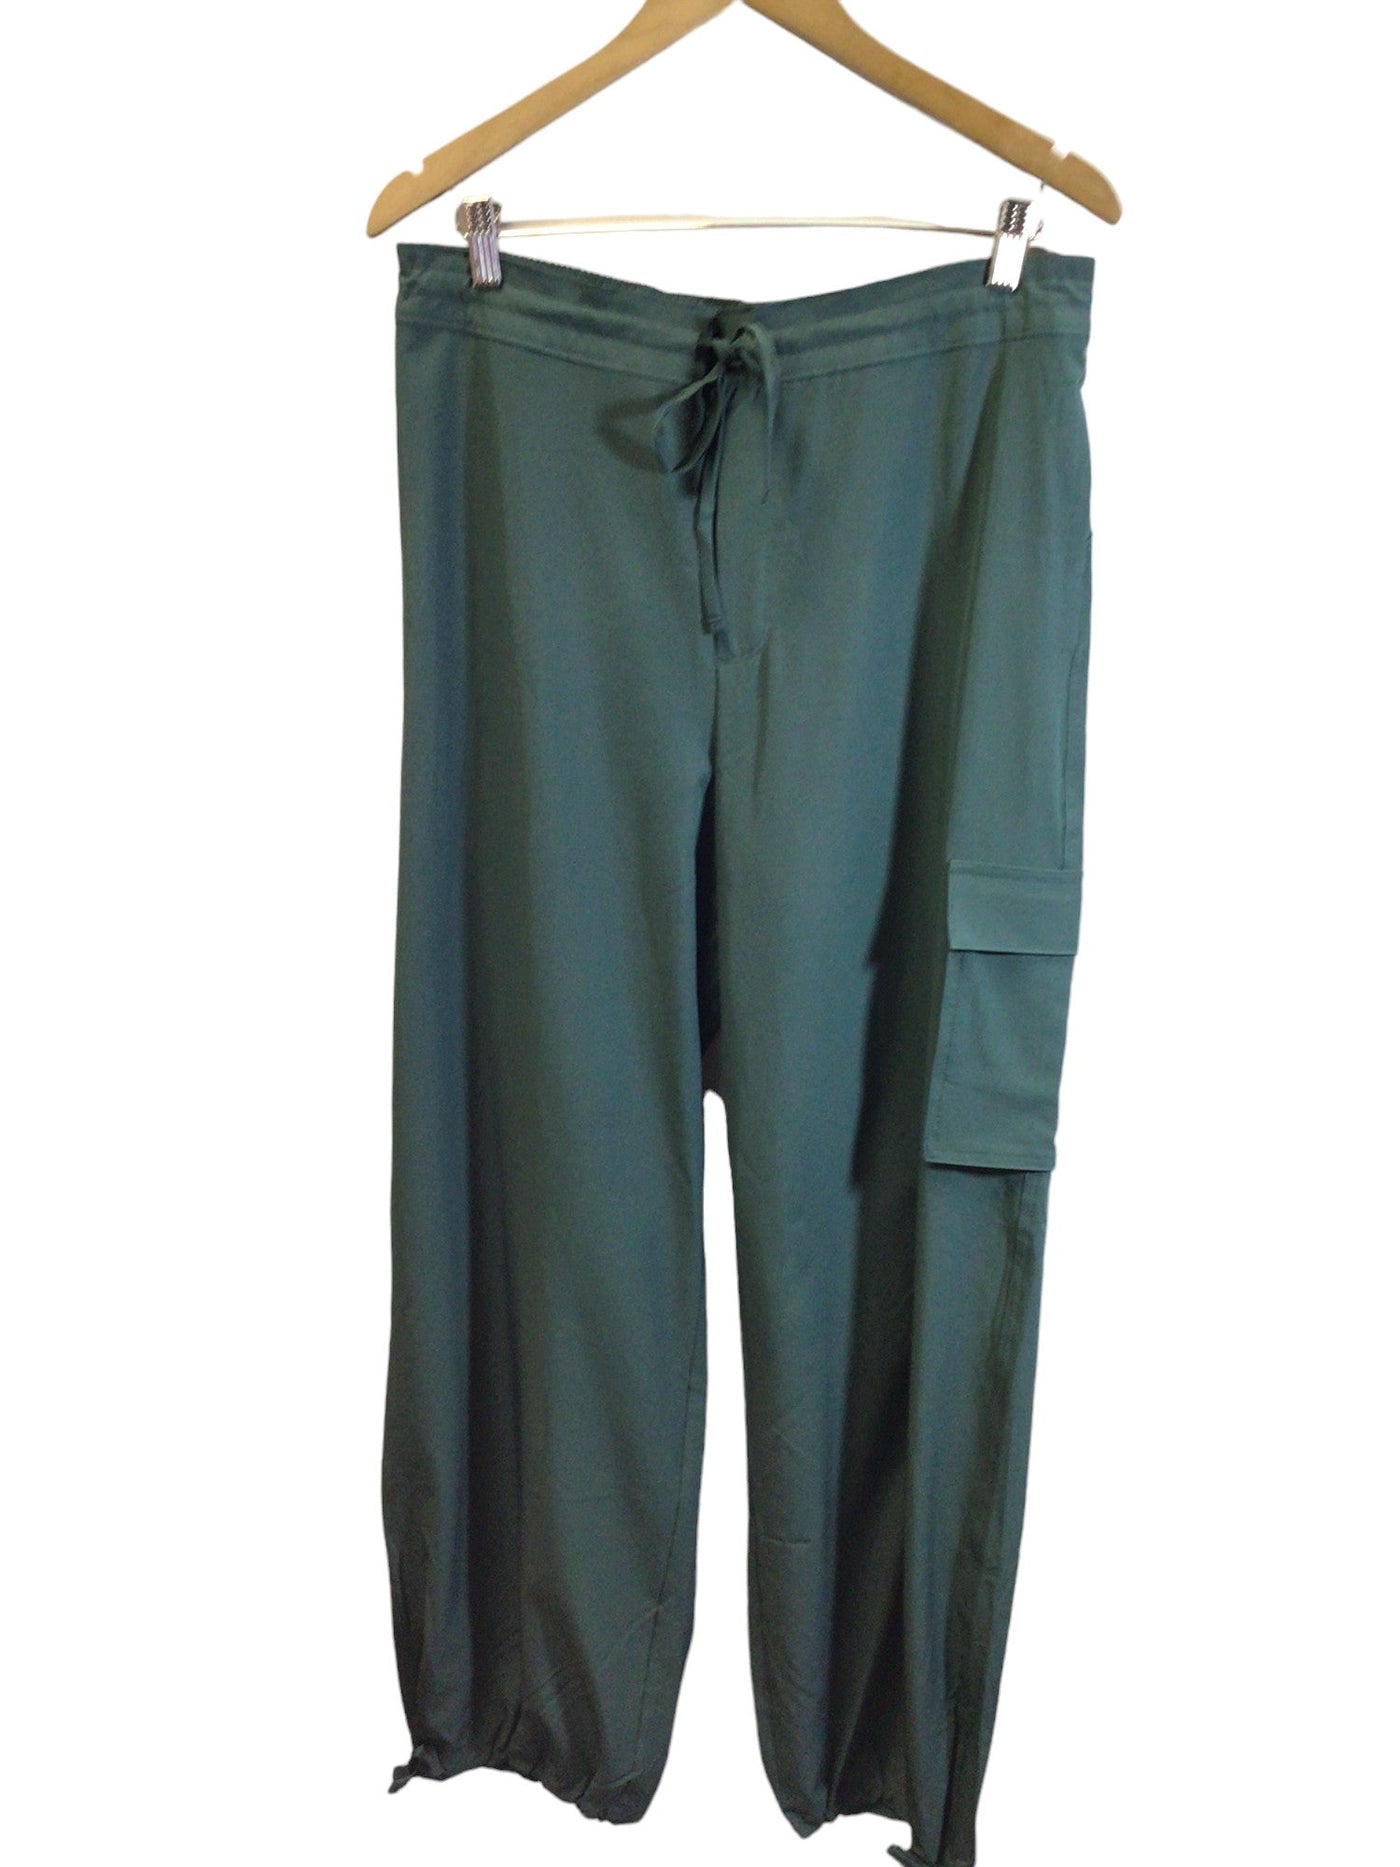 STRETCHTECH Women Cargo Pants Regular fit in Green - Size M | 15 $ KOOP